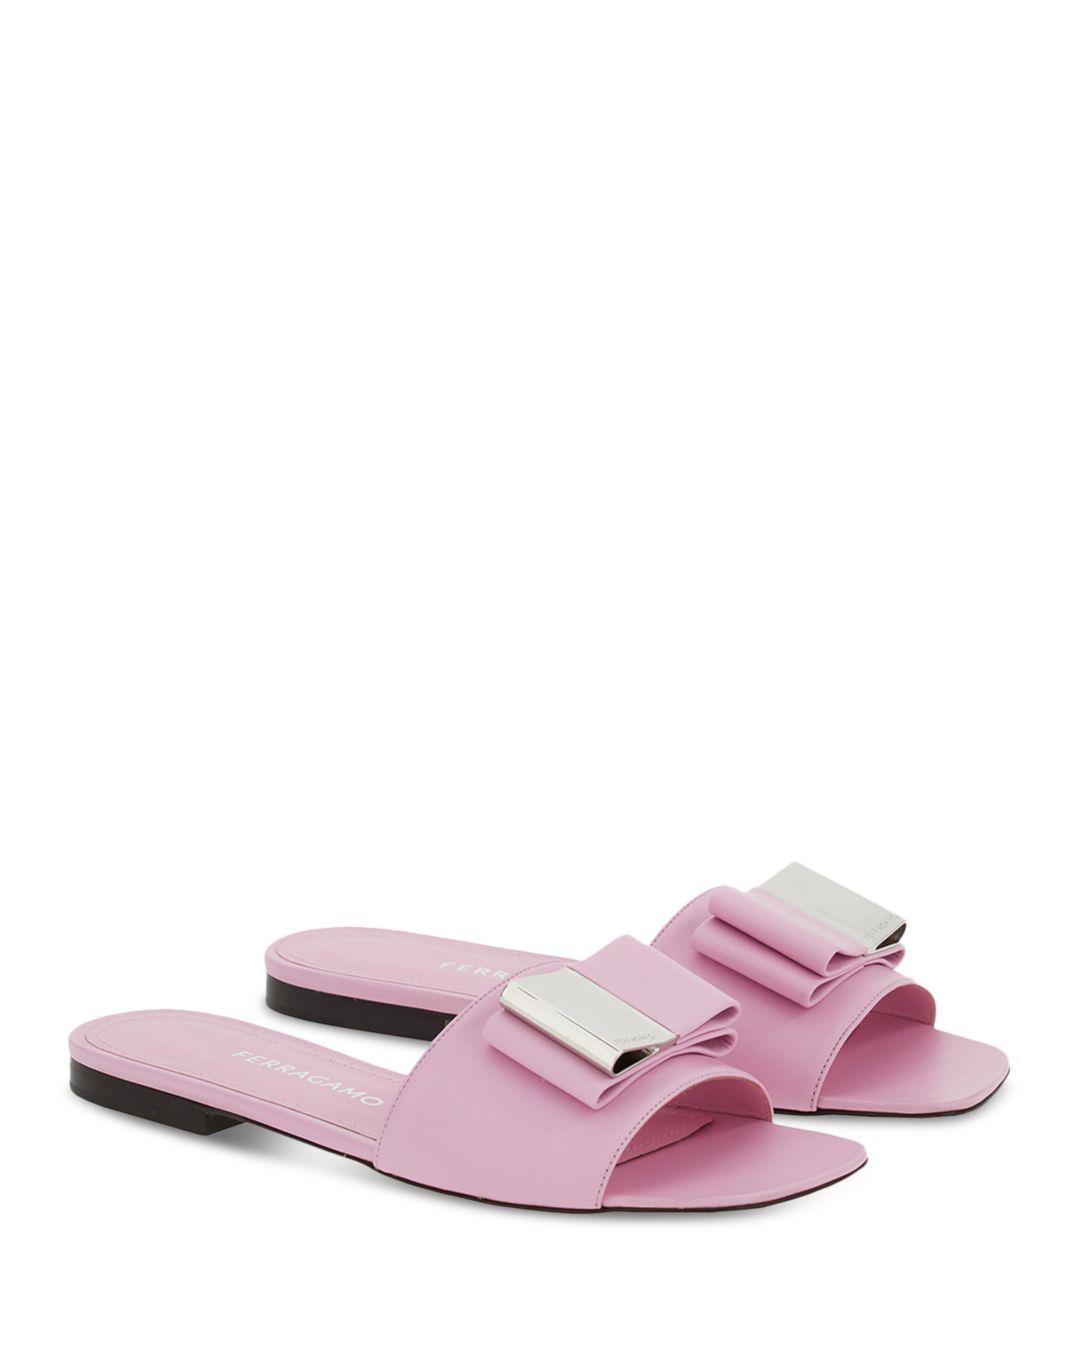 Ferragamo Lyana Leather Slide Sandals in Pink | Lyst